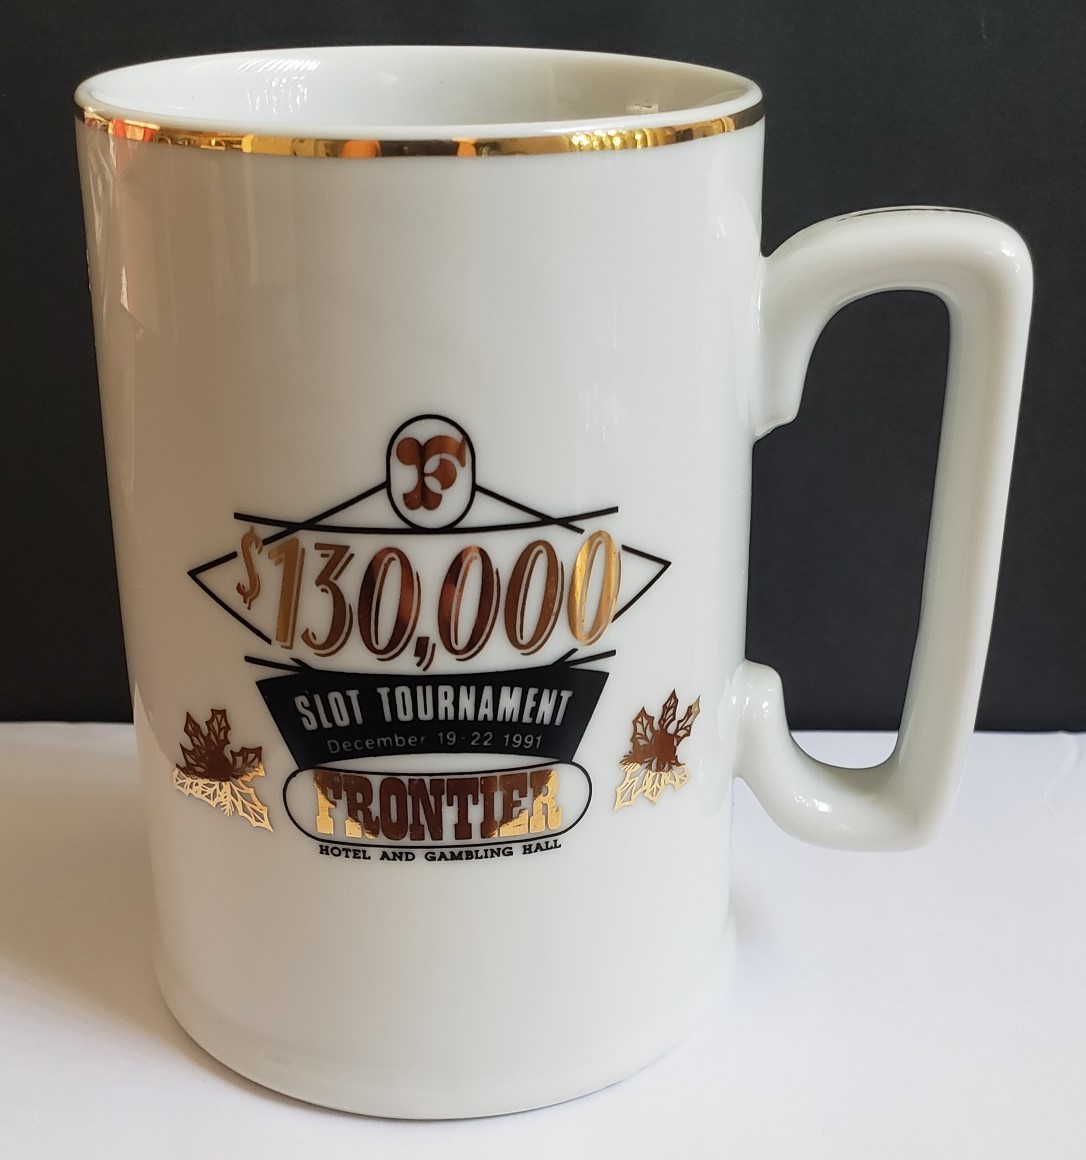 Frontier Hotel & Gambling Hall $130,000 Slot Tournament Dec 1991 ceramic mug - $10.95